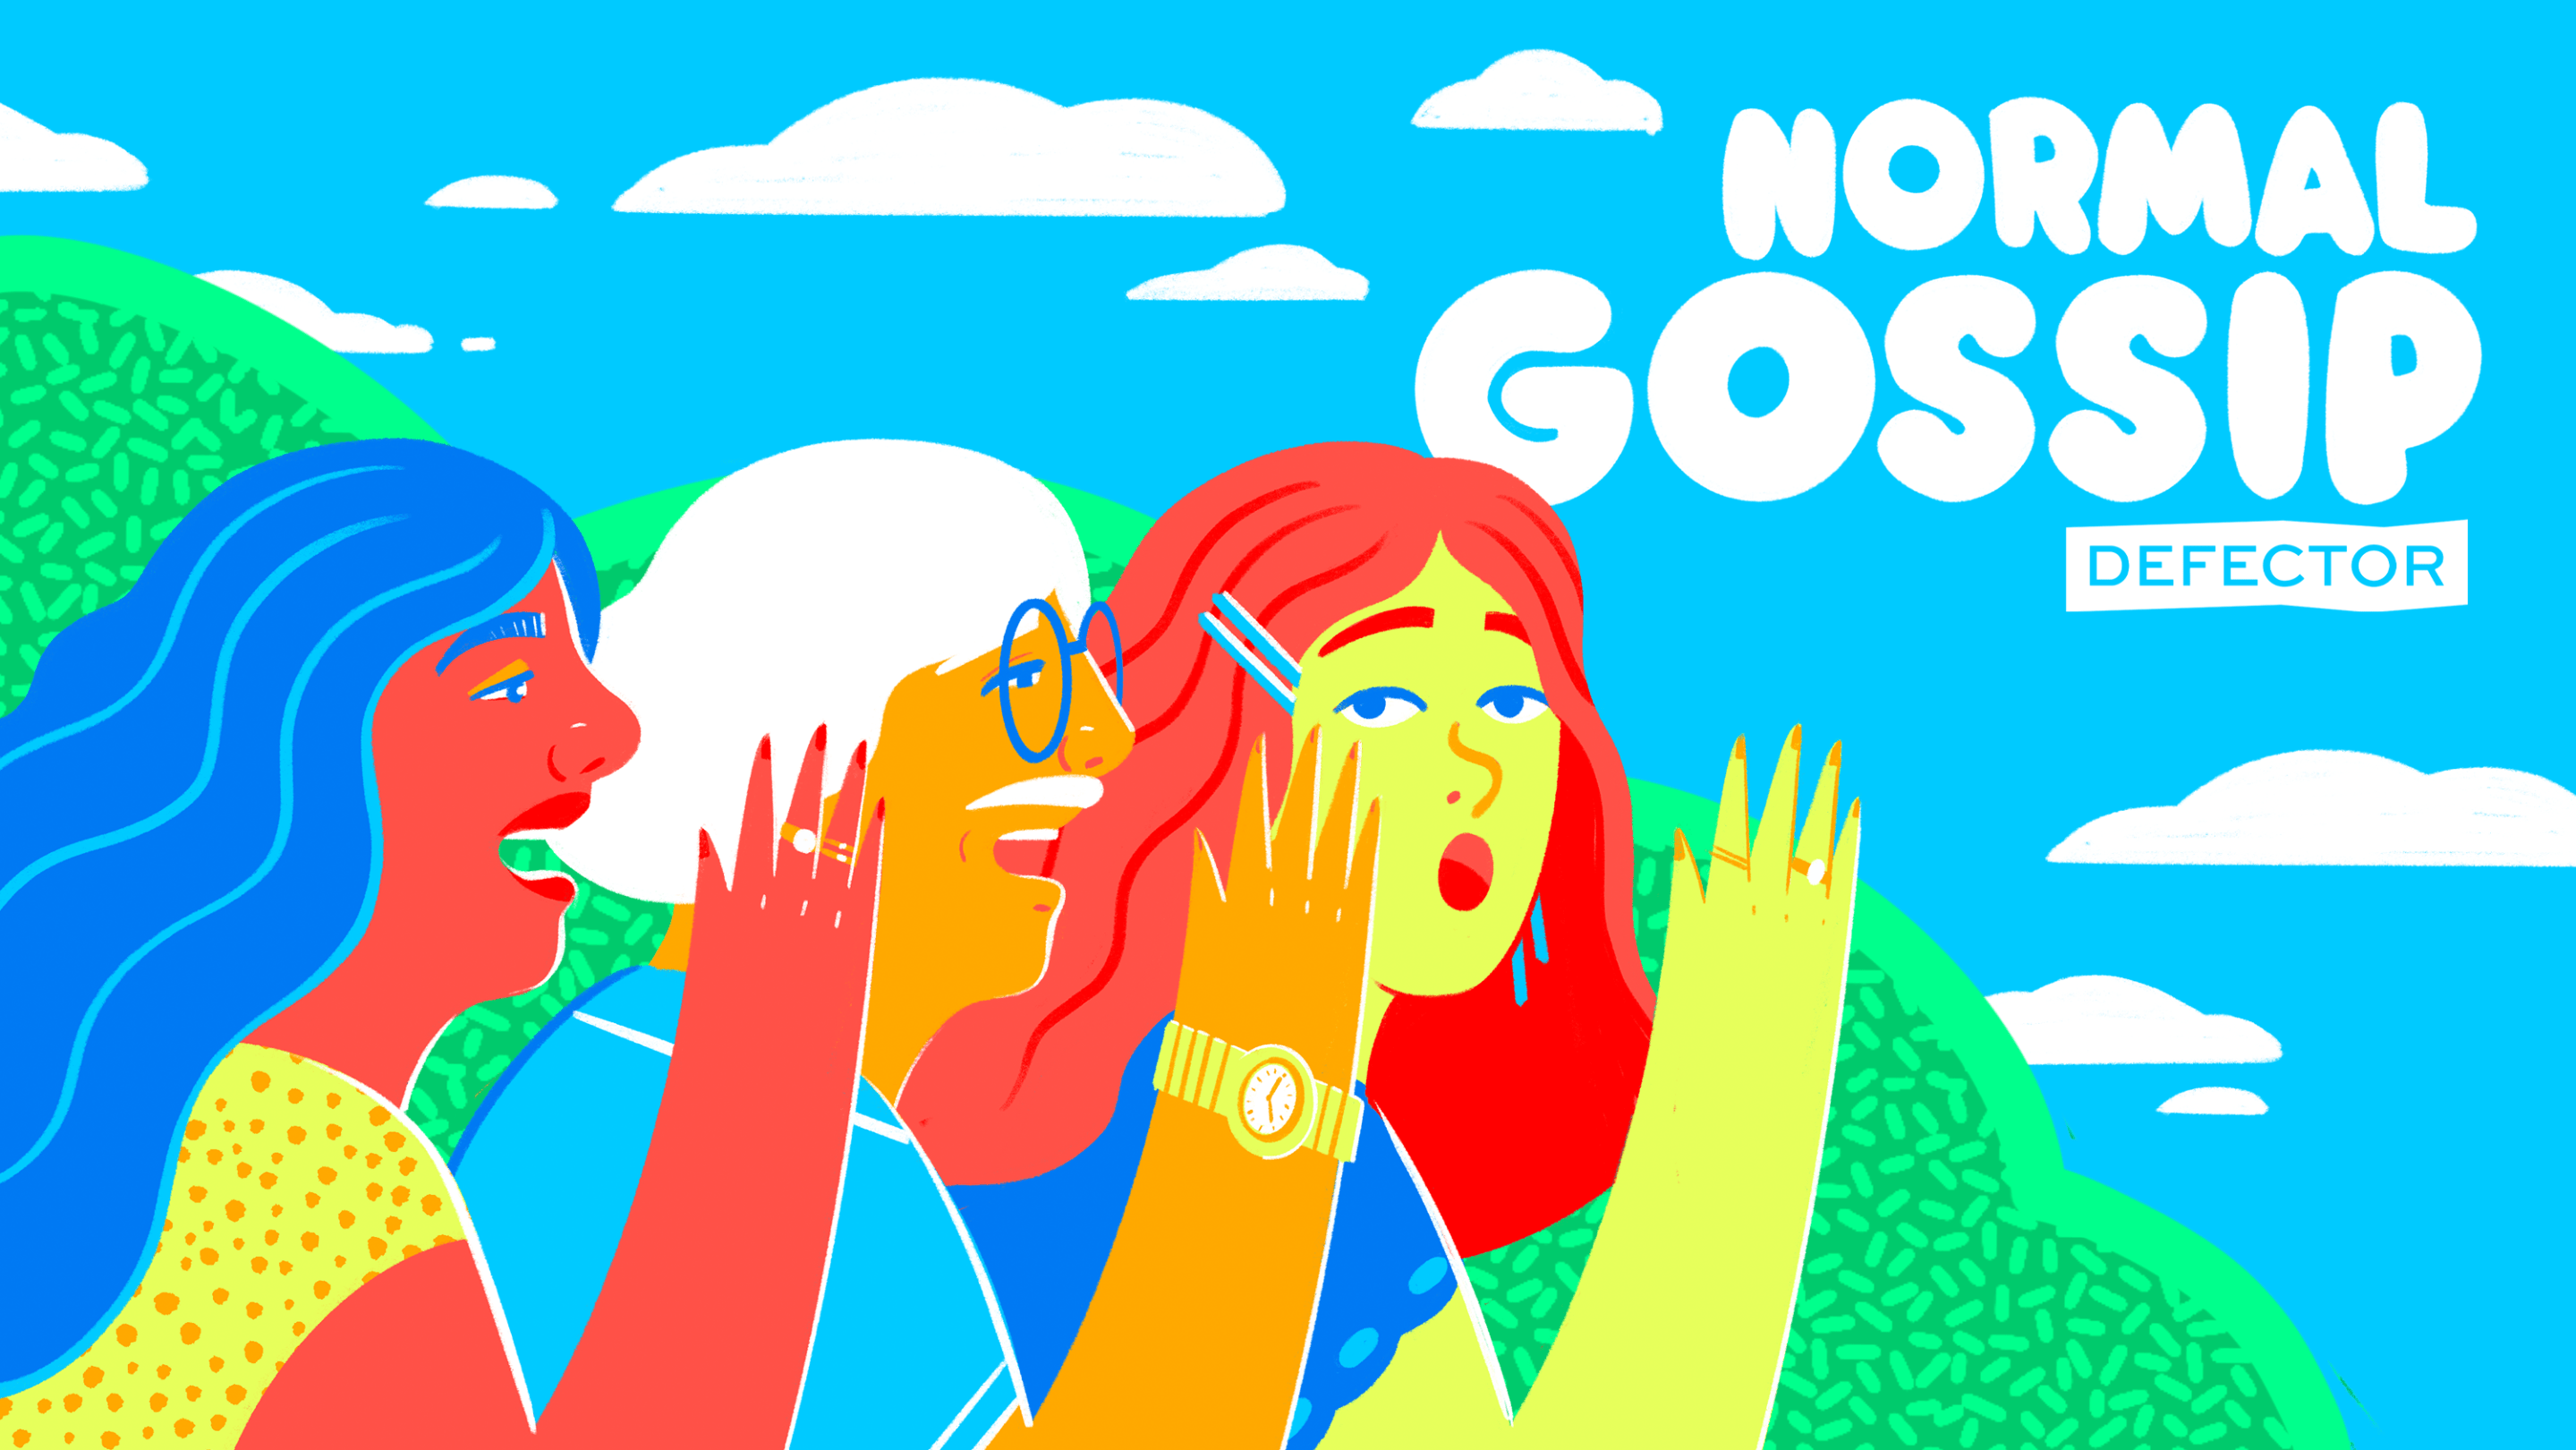 Normal Gossip logo with cartoon characters gossiping